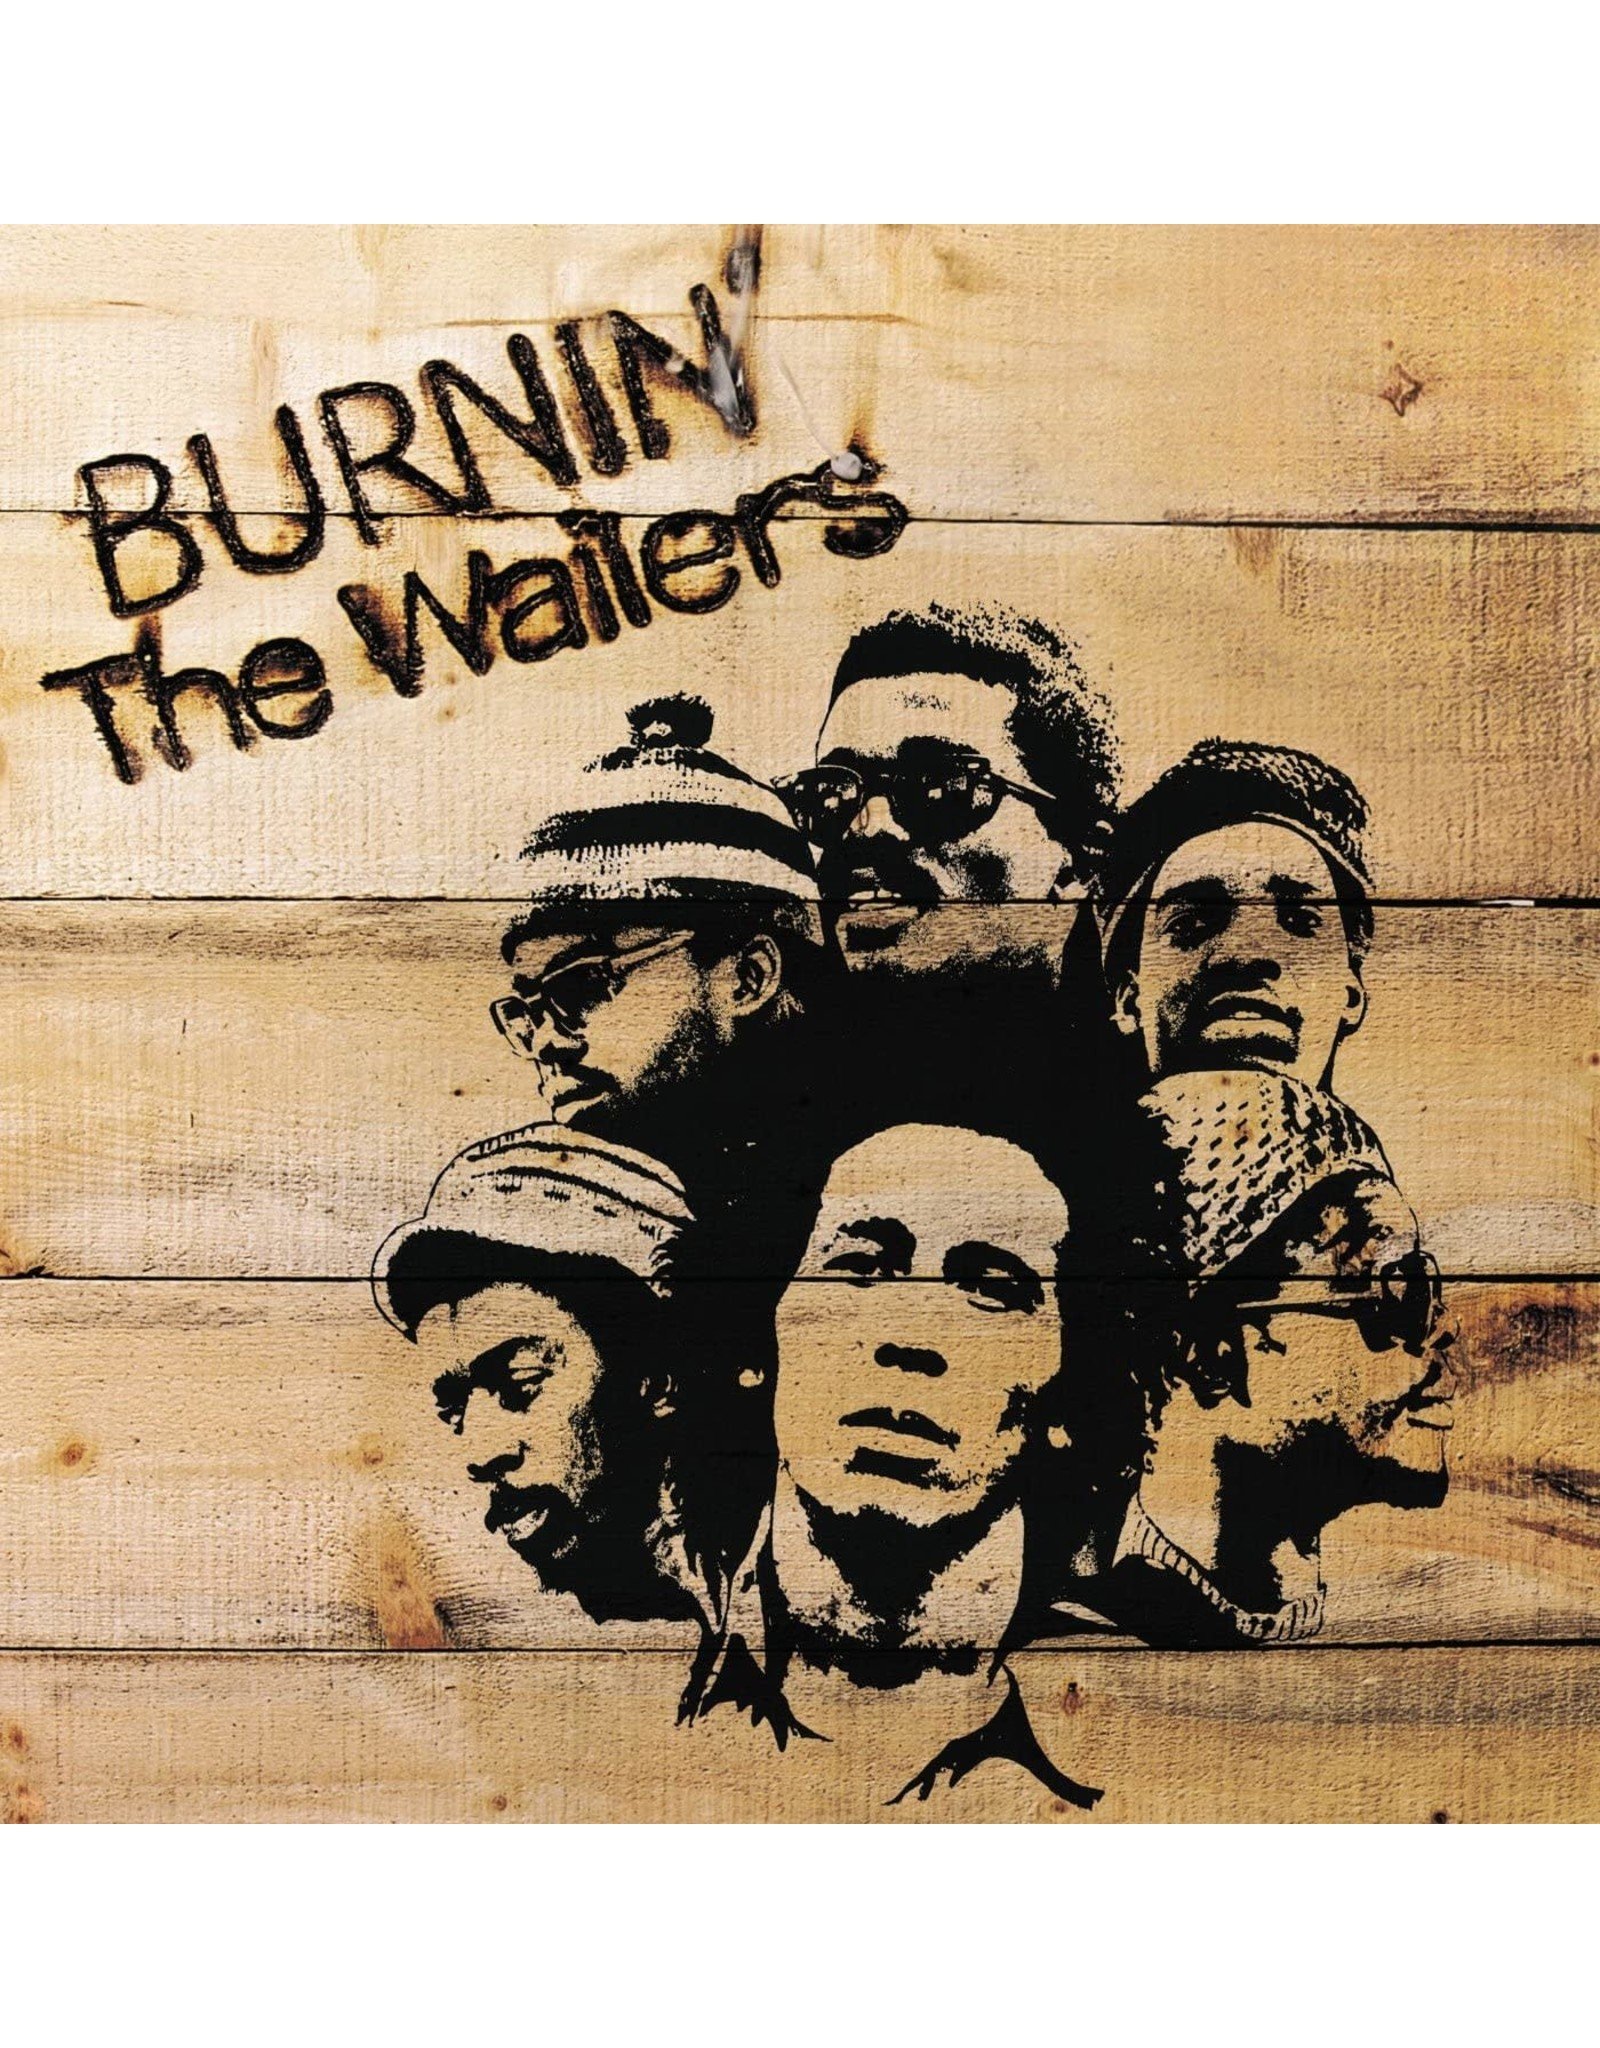 Bob Marley - Burnin' (Half Speed Master)